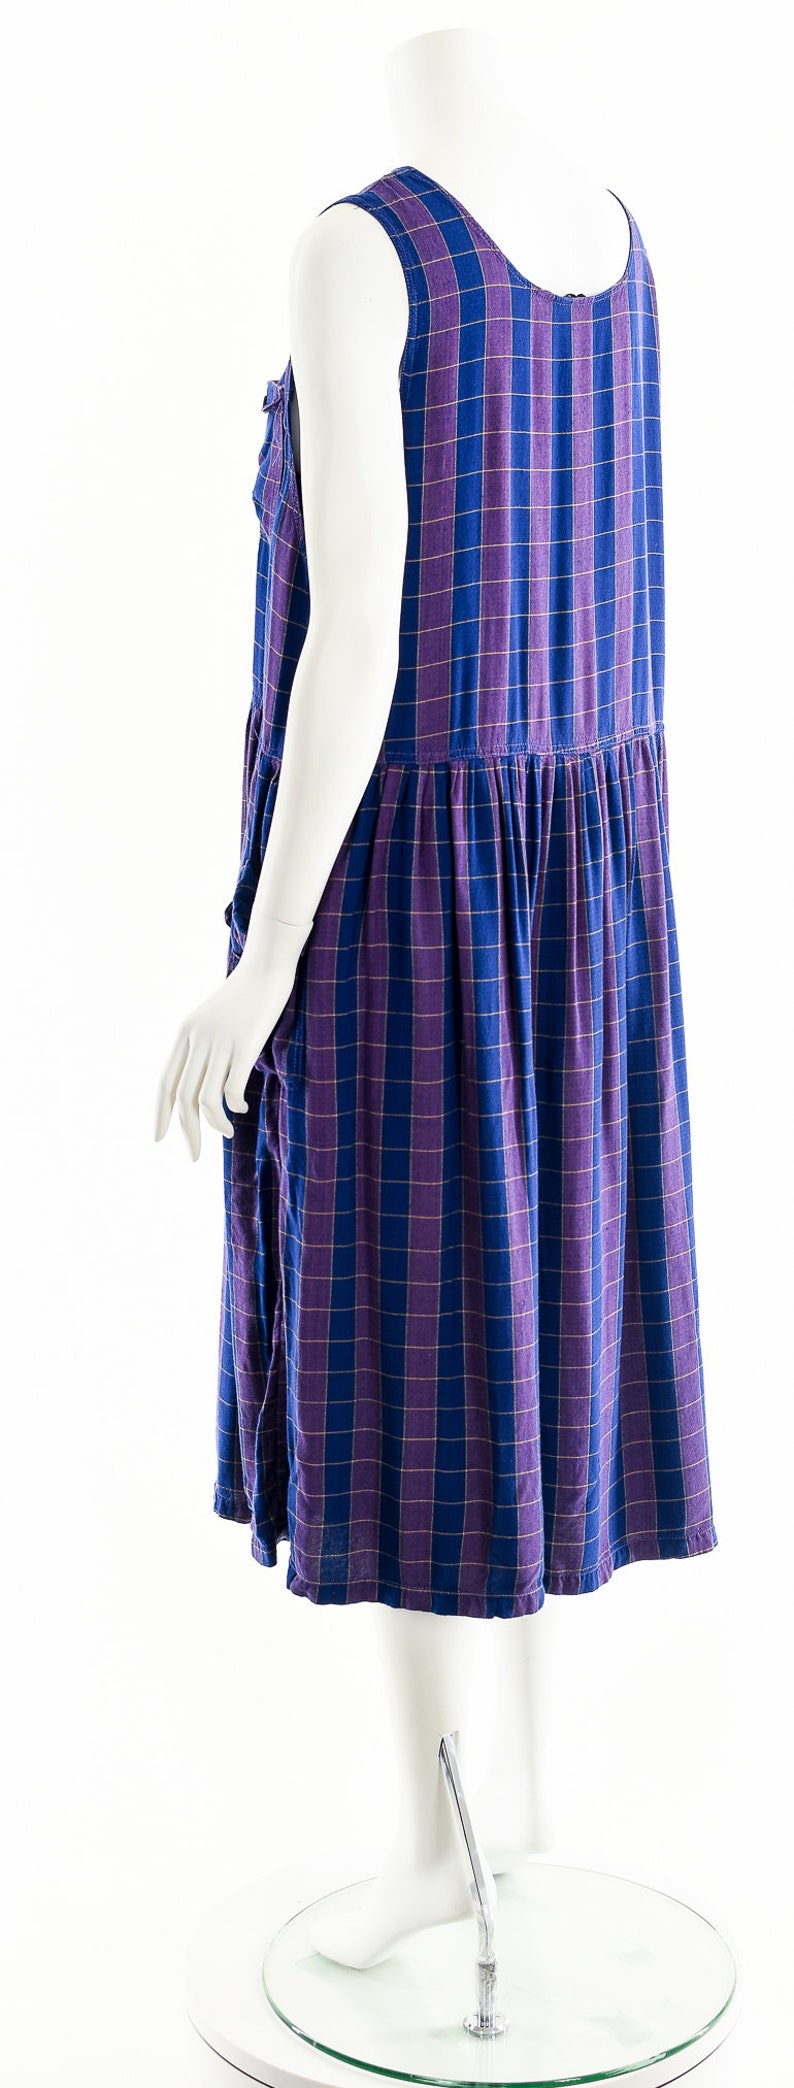 Rayon India Dress,Plaid Purple Midi Dress,Vintage Indian Dress,Checkered Square Pinafore Dress,Vintage Soft Rayon Dress,Apron Dress,Preppy image 8